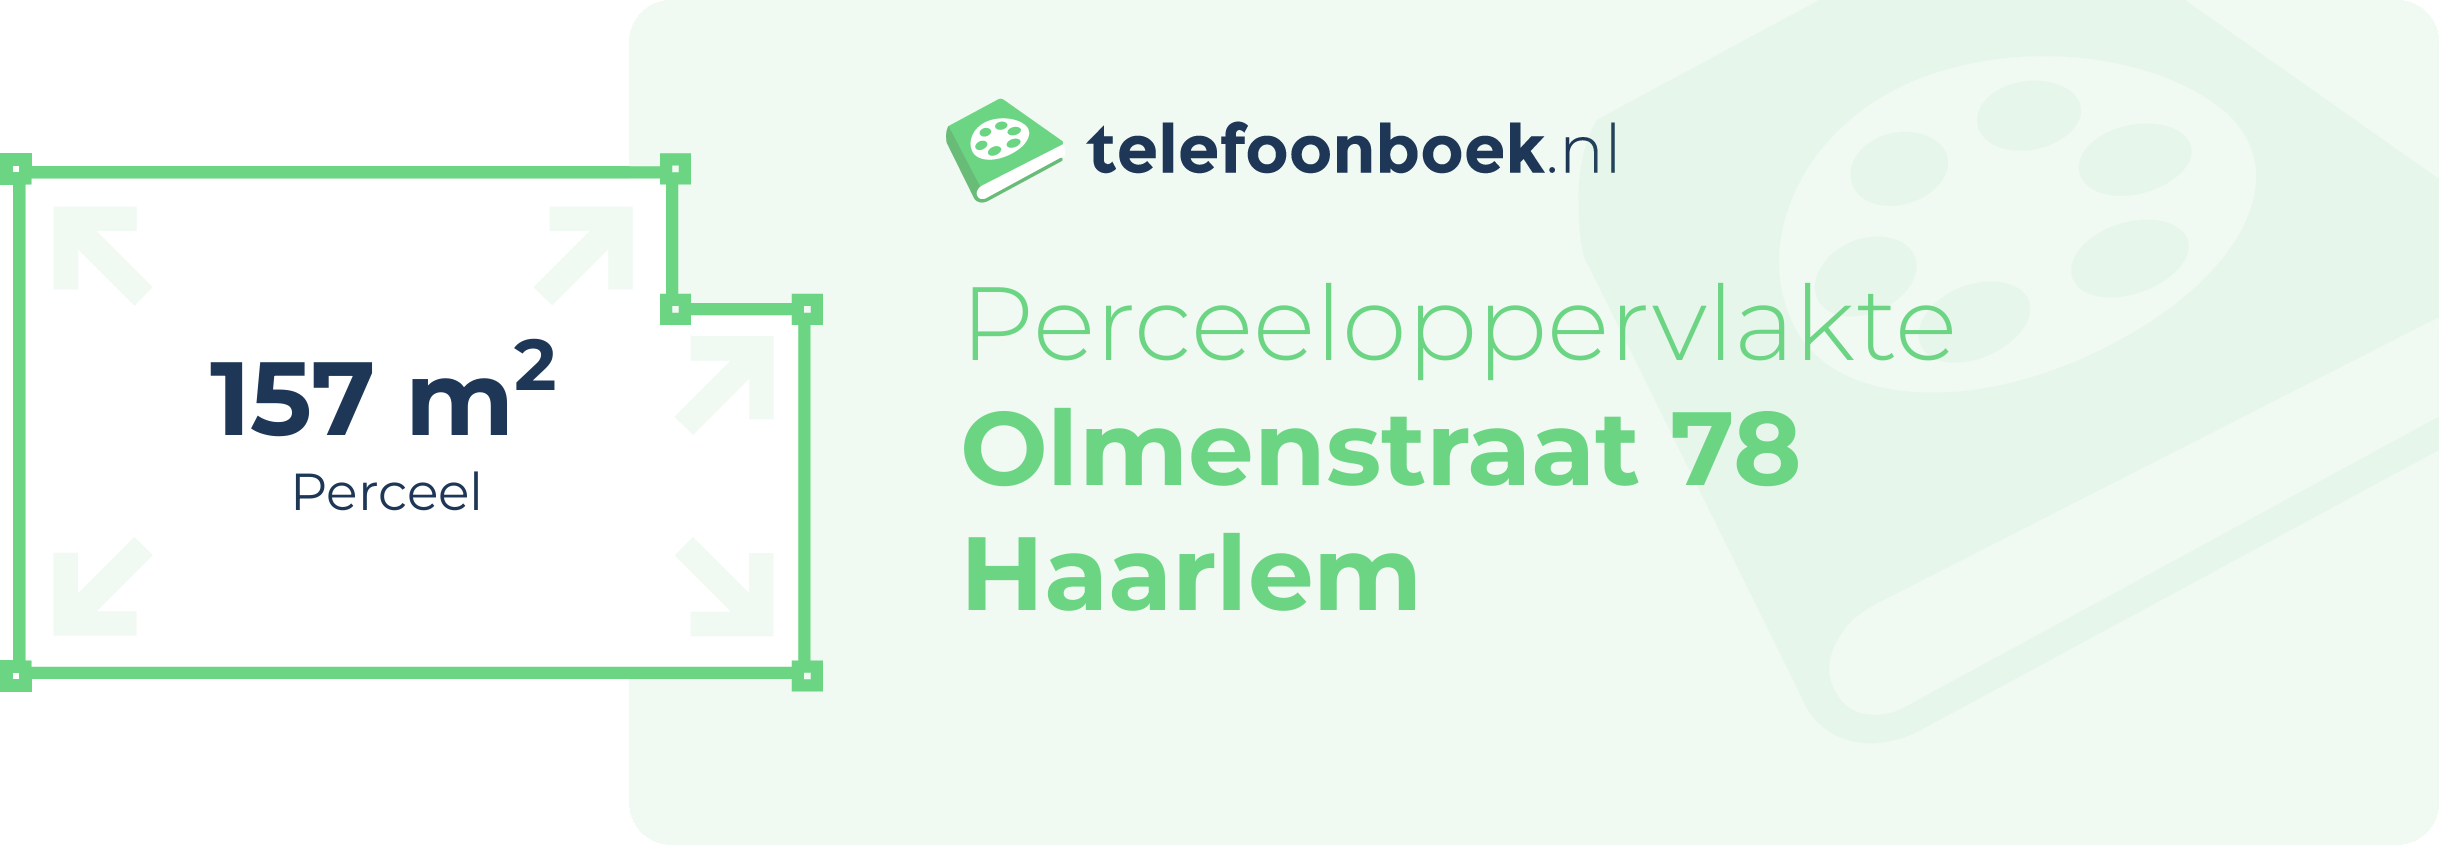 Perceeloppervlakte Olmenstraat 78 Haarlem